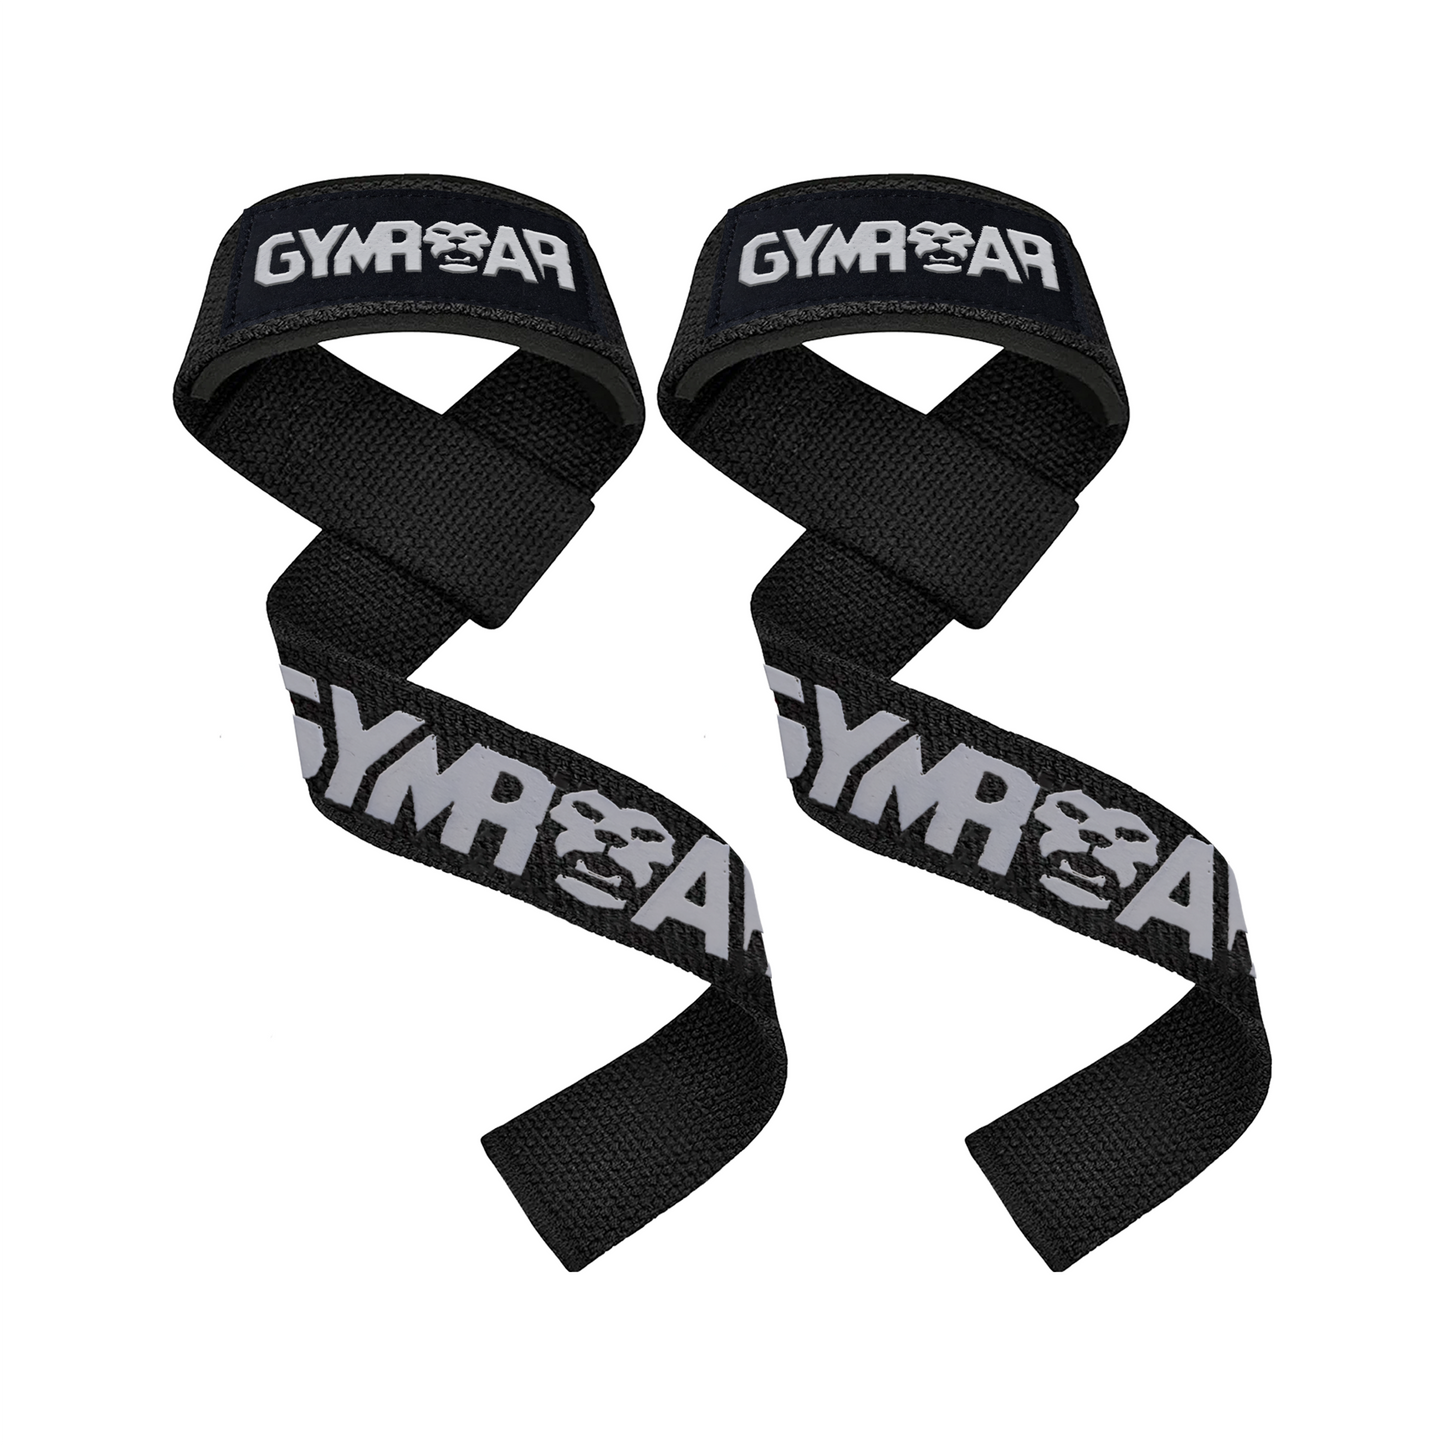 Gymshark Silicone Grip Lifting Straps - Black, lifting straps